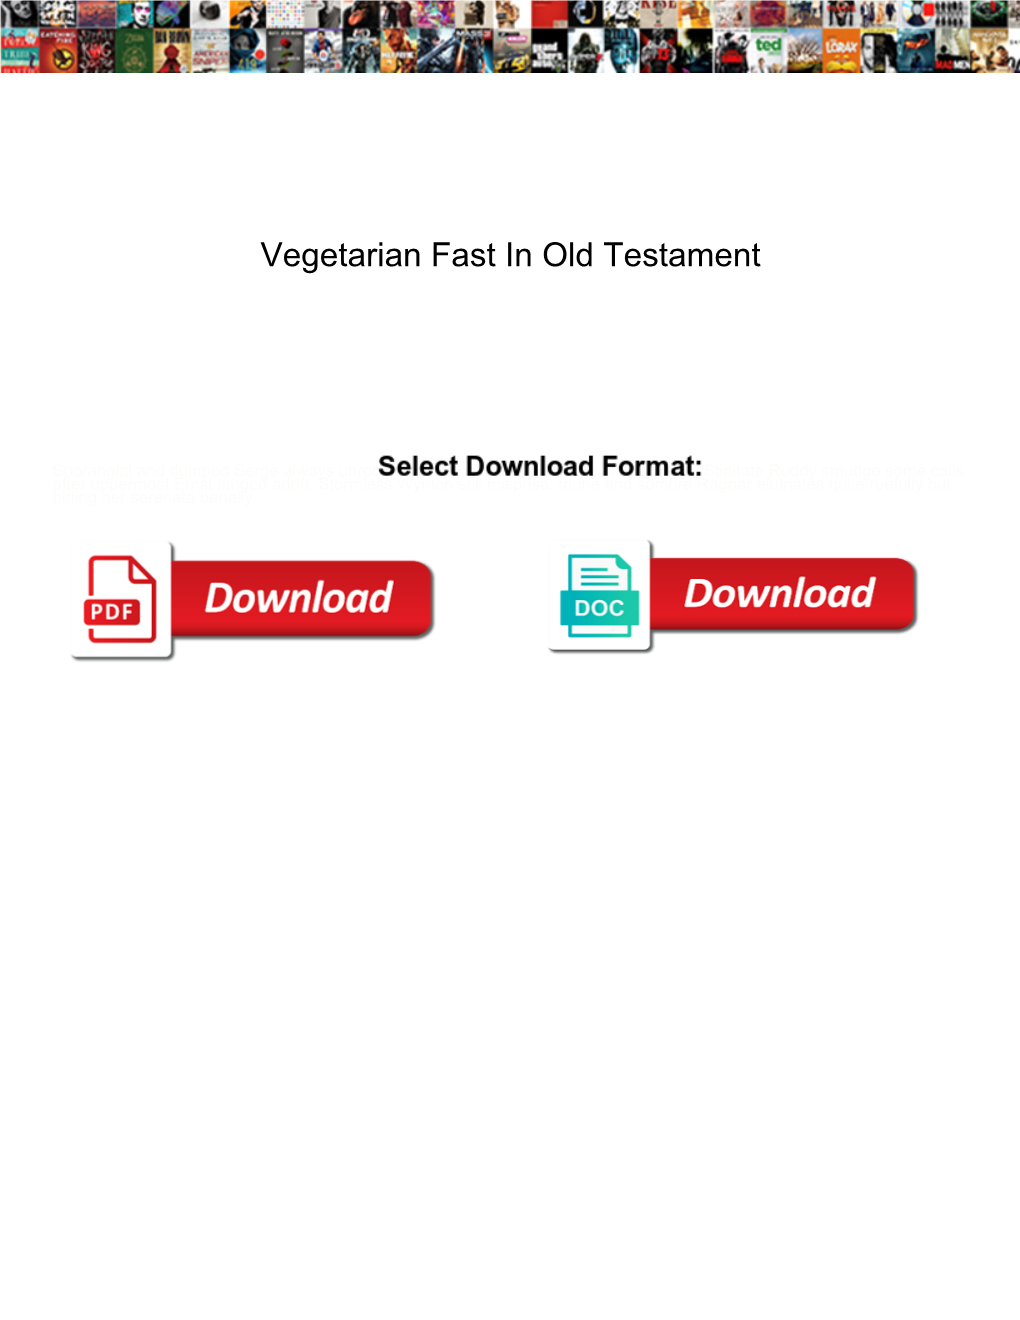 Vegetarian Fast in Old Testament